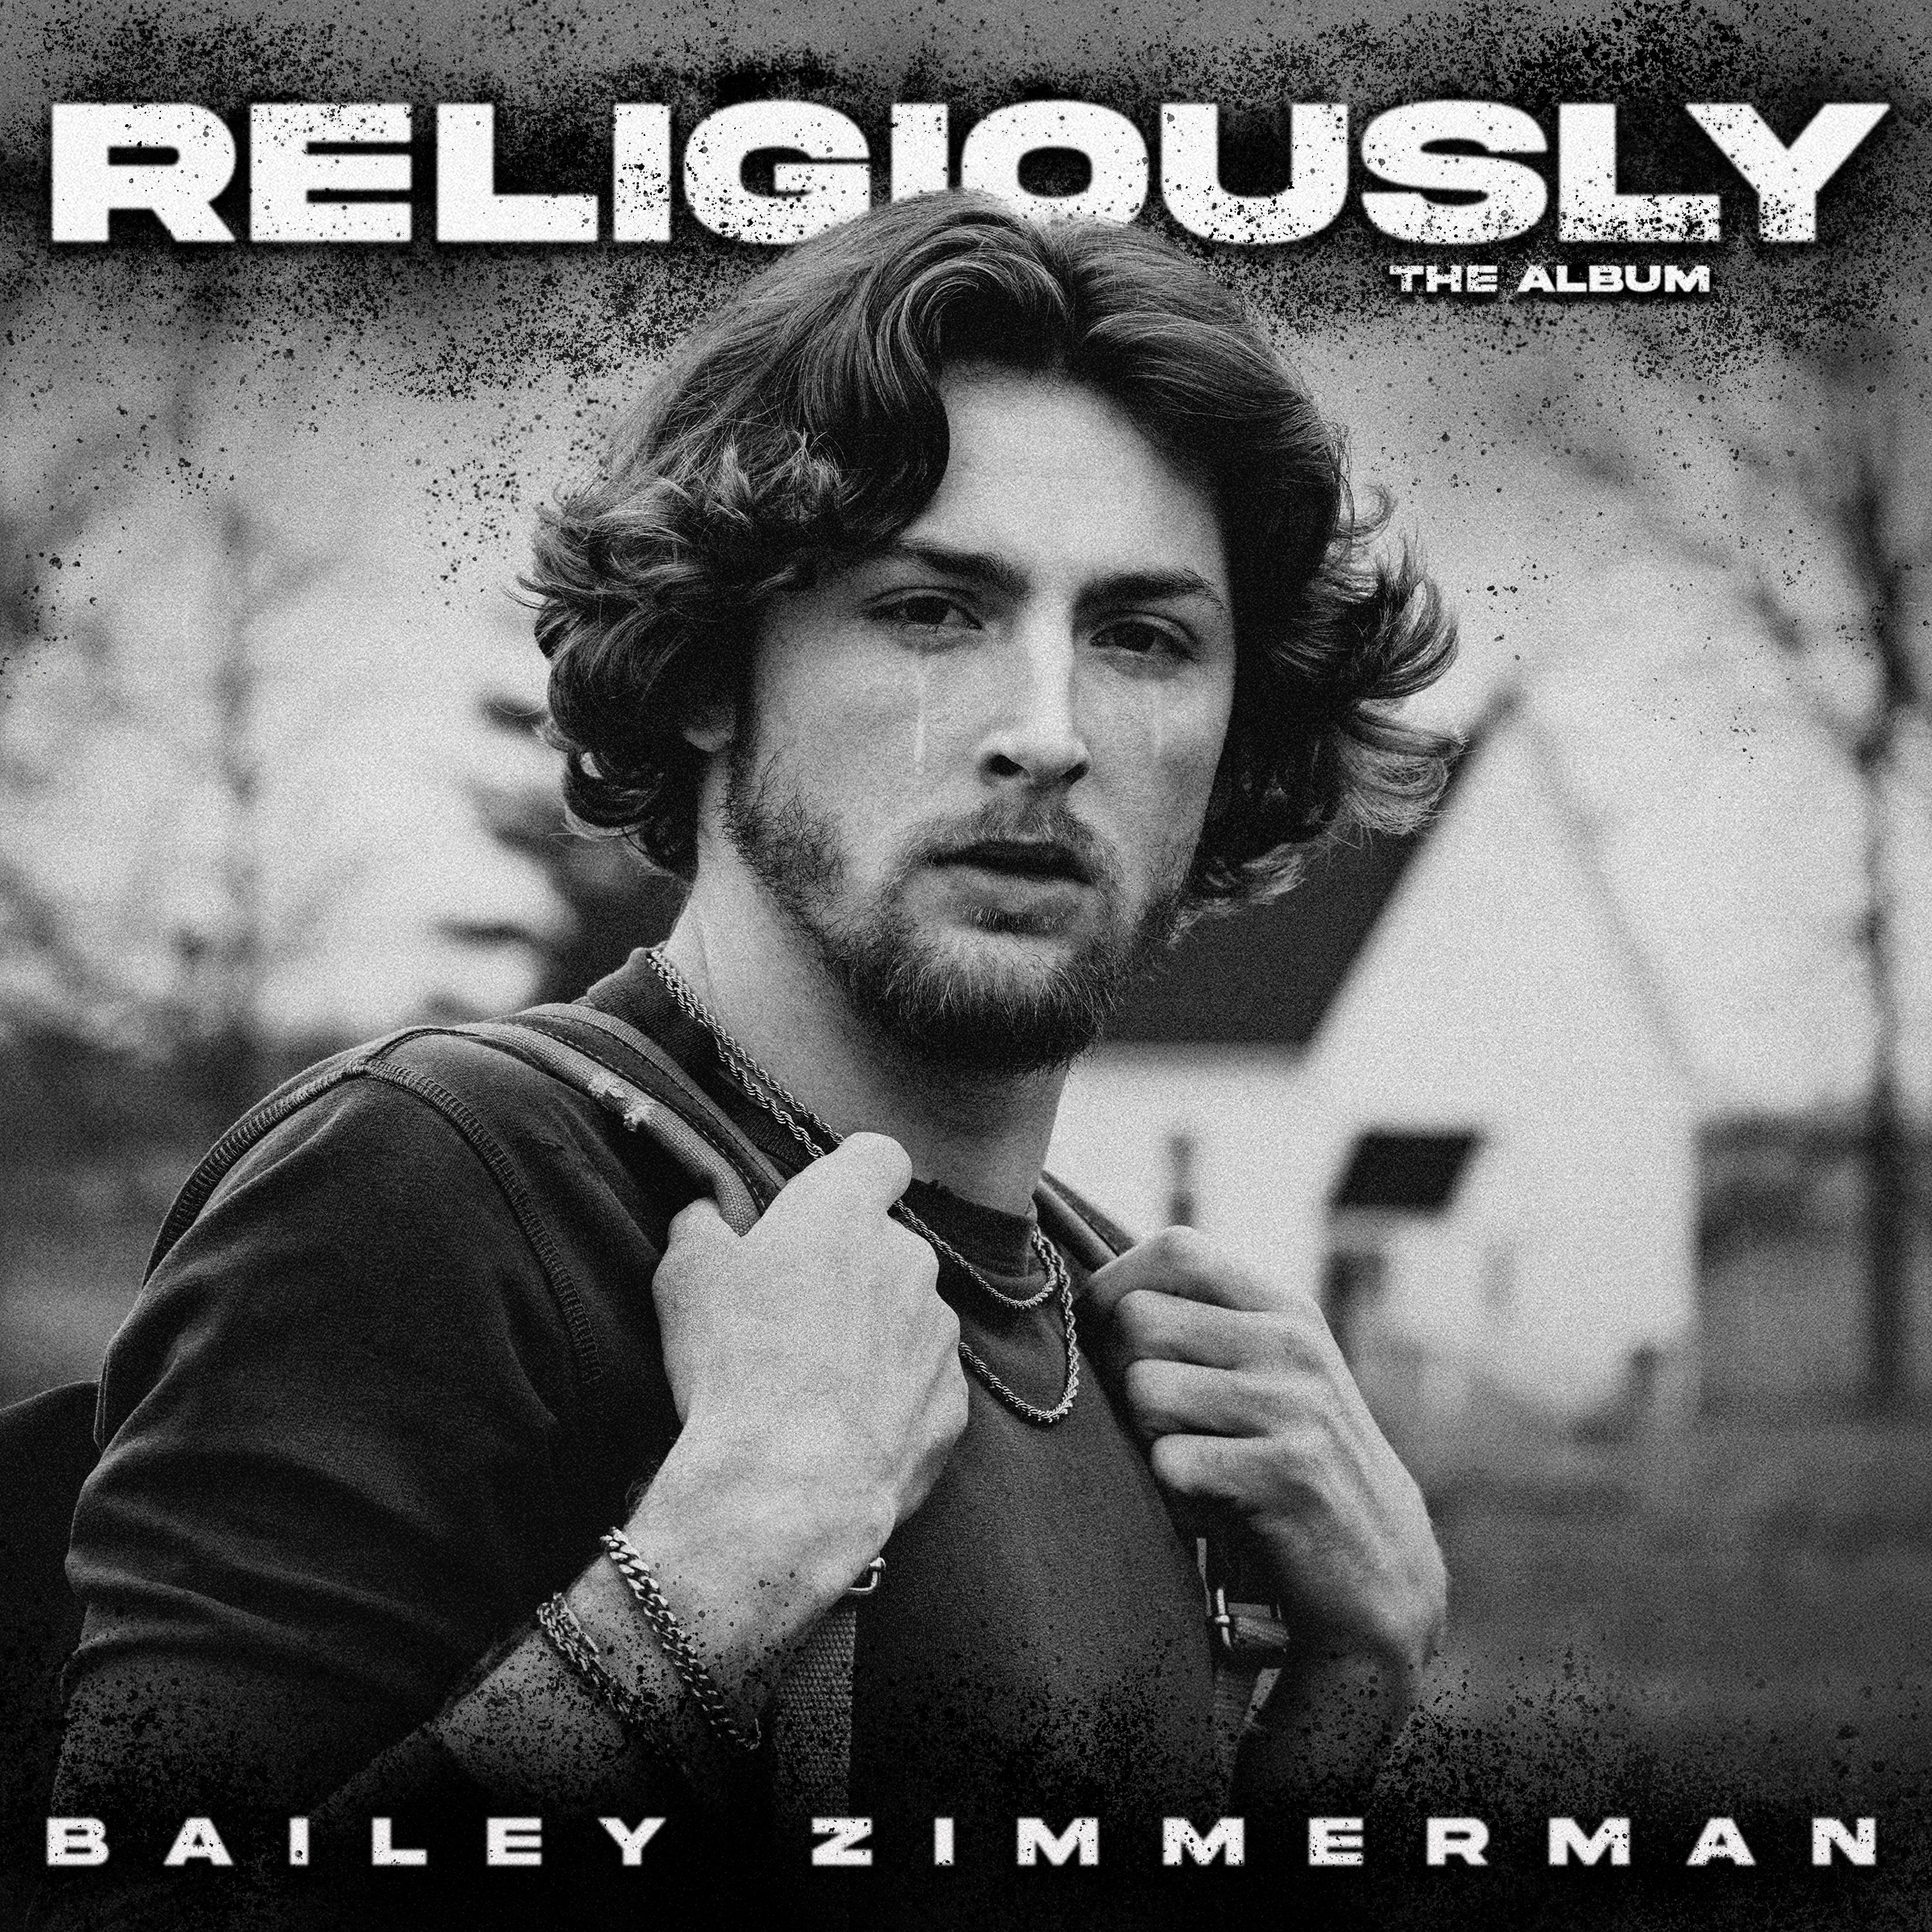 Bailey Zimmerman - Found Your Love